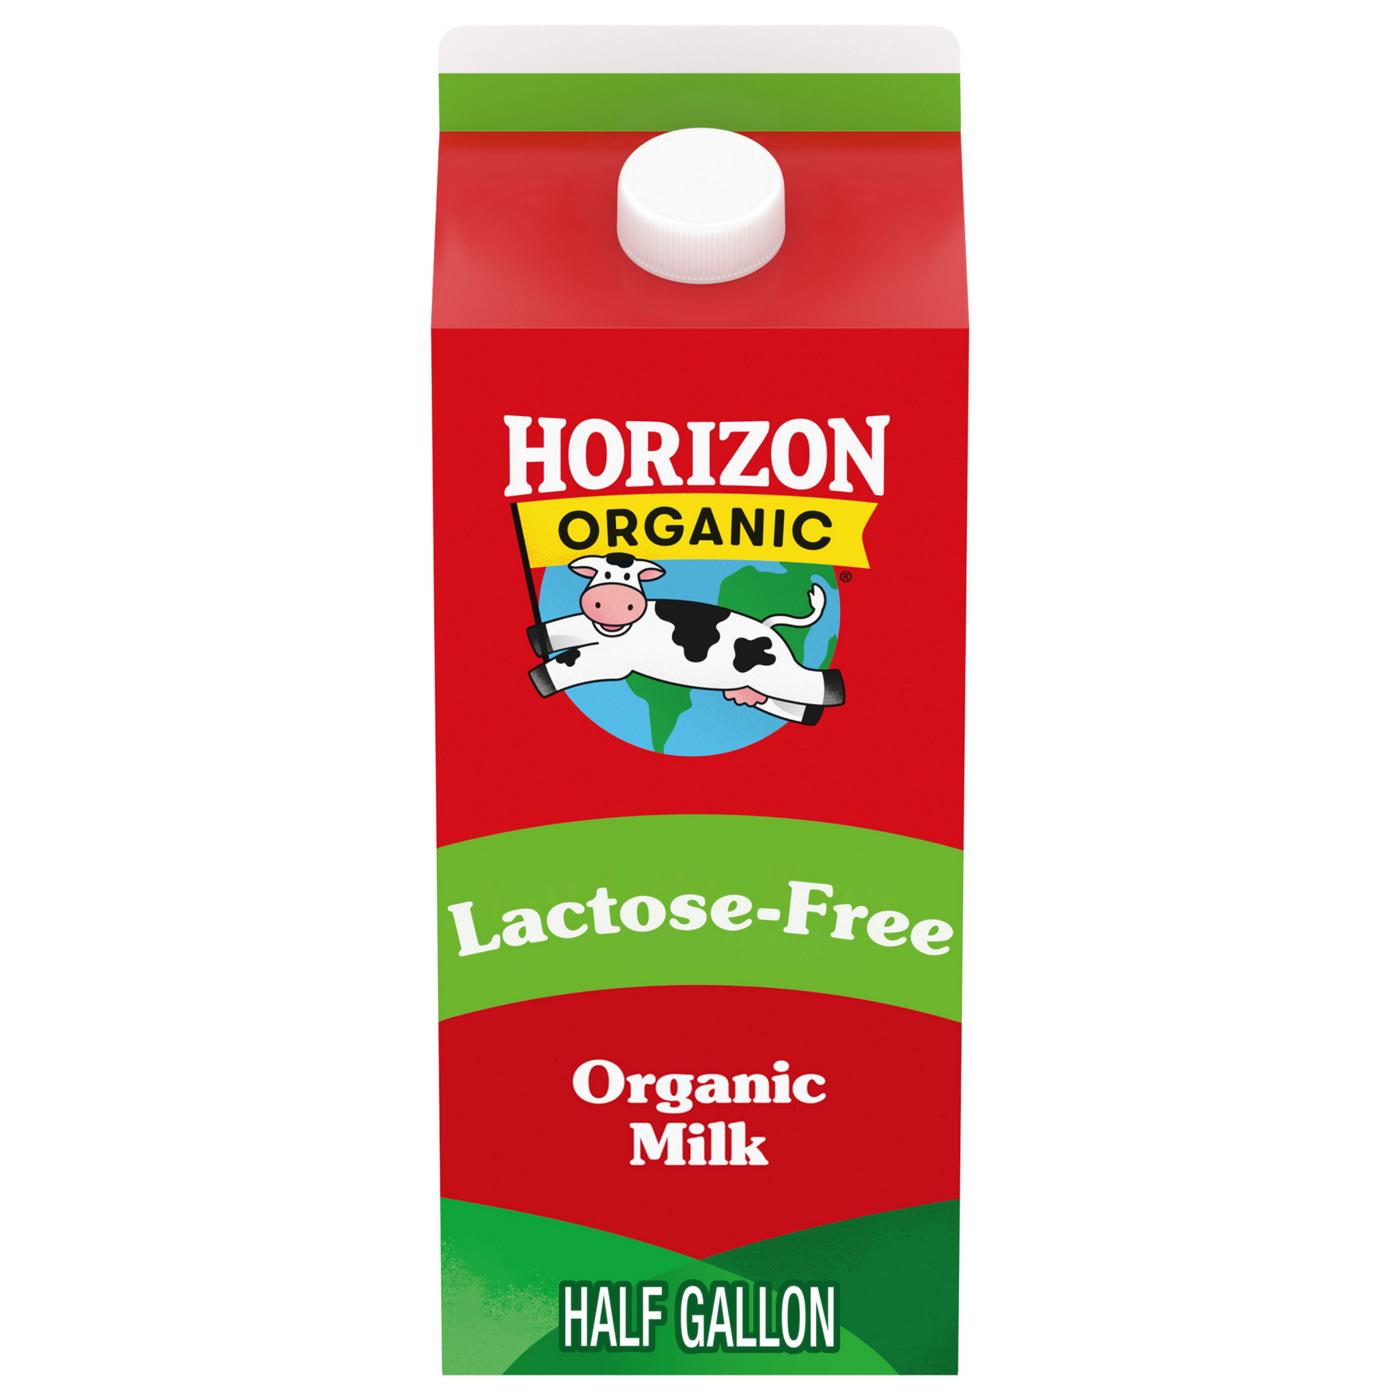 Horizon Organic Lactose Free Milk, Whole Milk; image 1 of 6